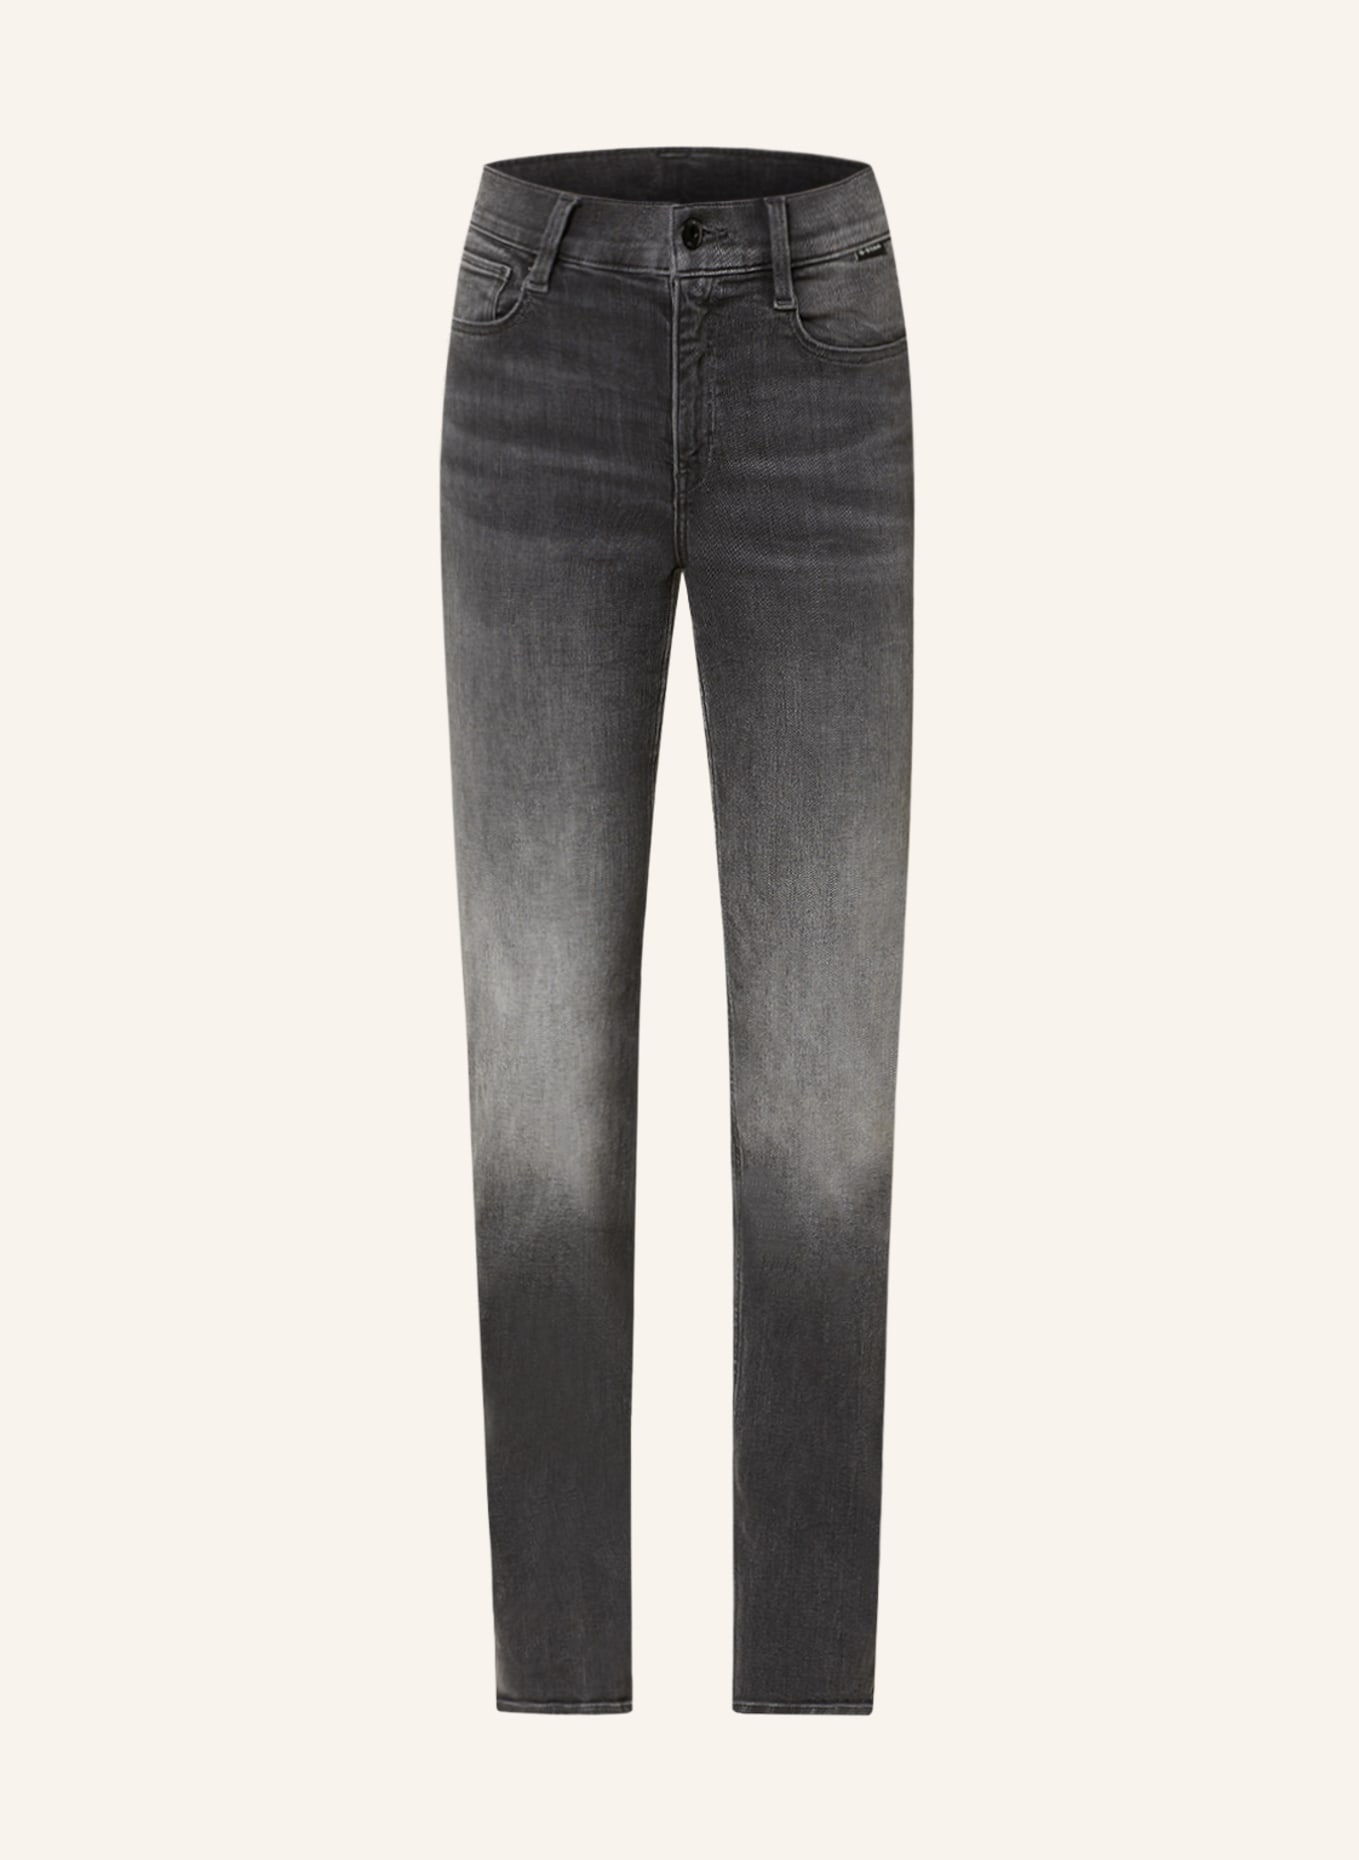 G-Star RAW Straight Jeans, Farbe: G108 worn in black moon (Bild 1)